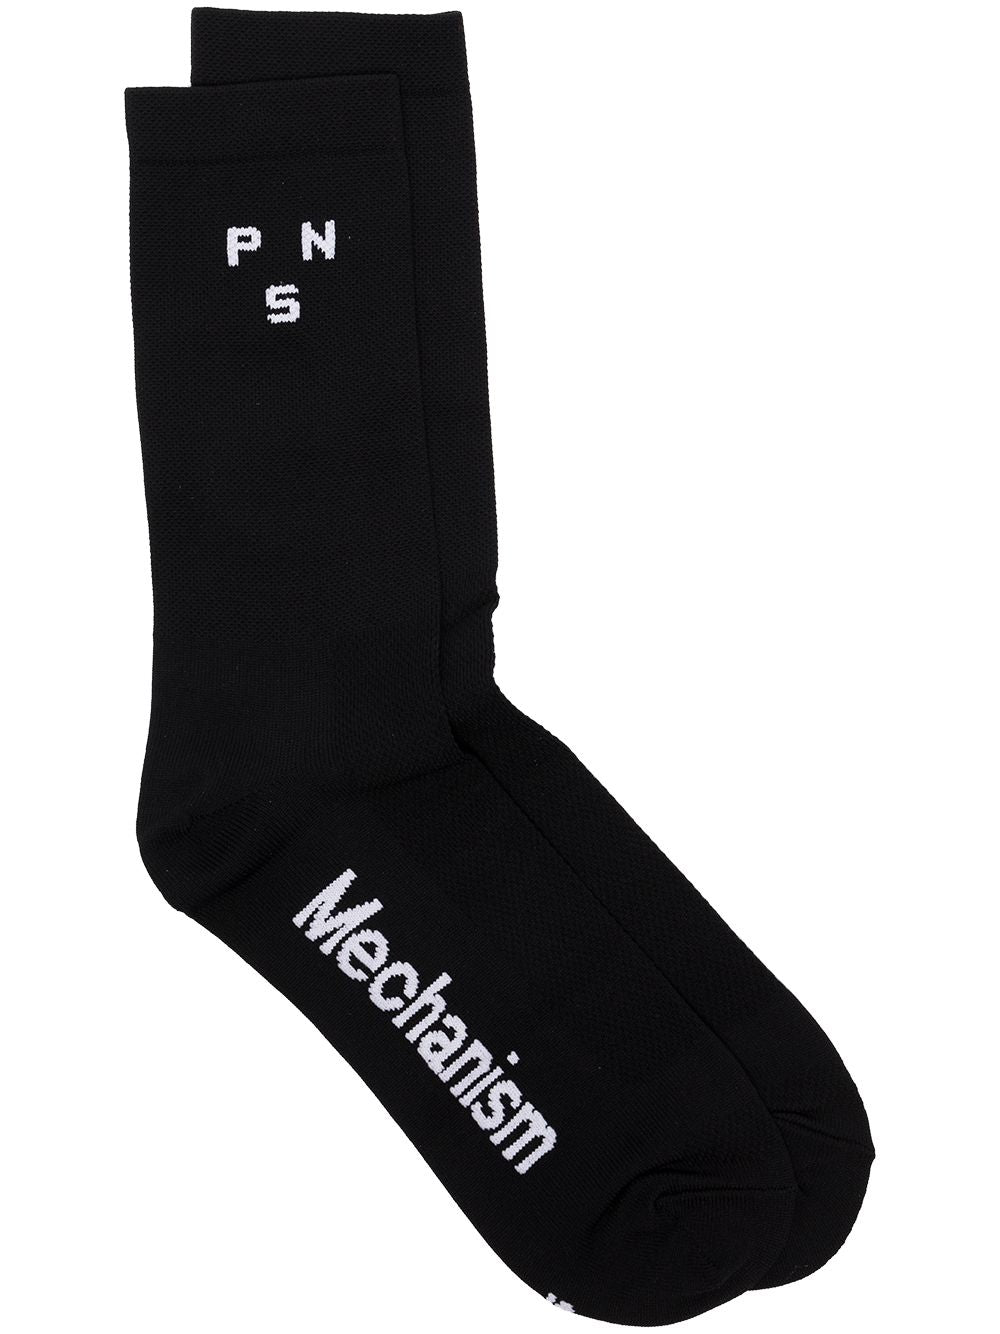 Black Mechanism ankle socks